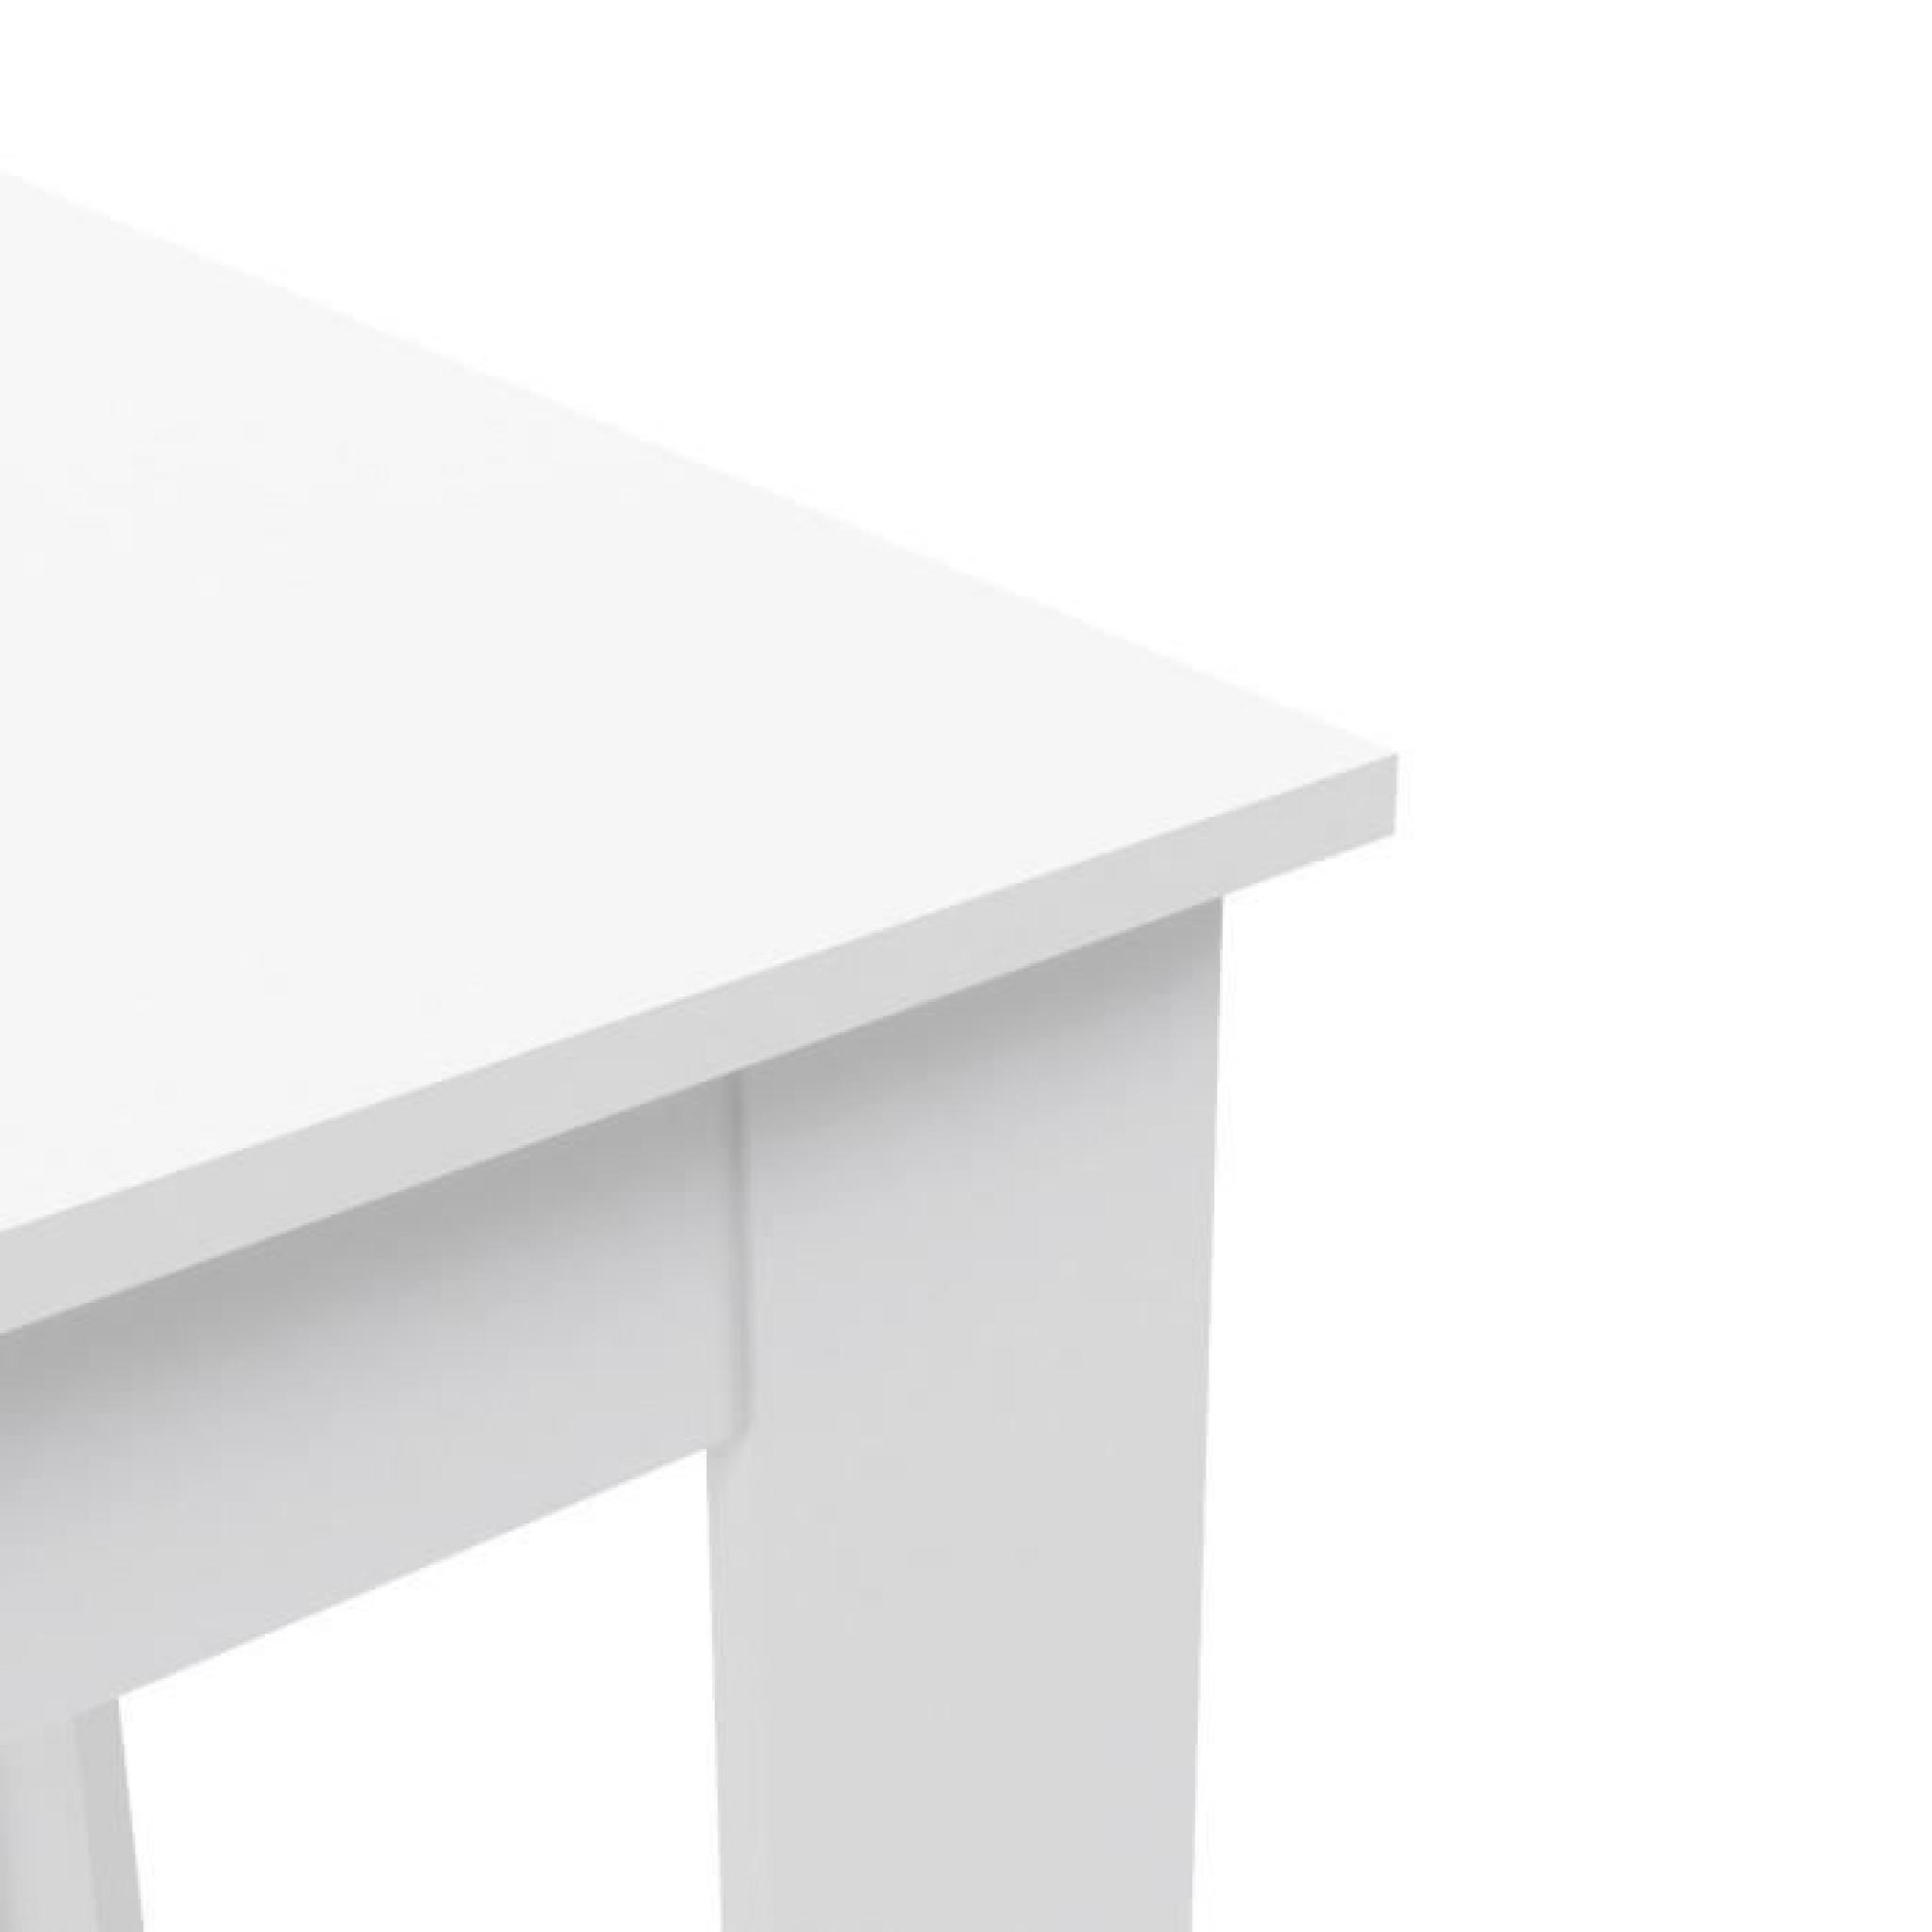 FINLANDEK Table de bar TIETTI 110x110x95 cm - Blanc mat pas cher